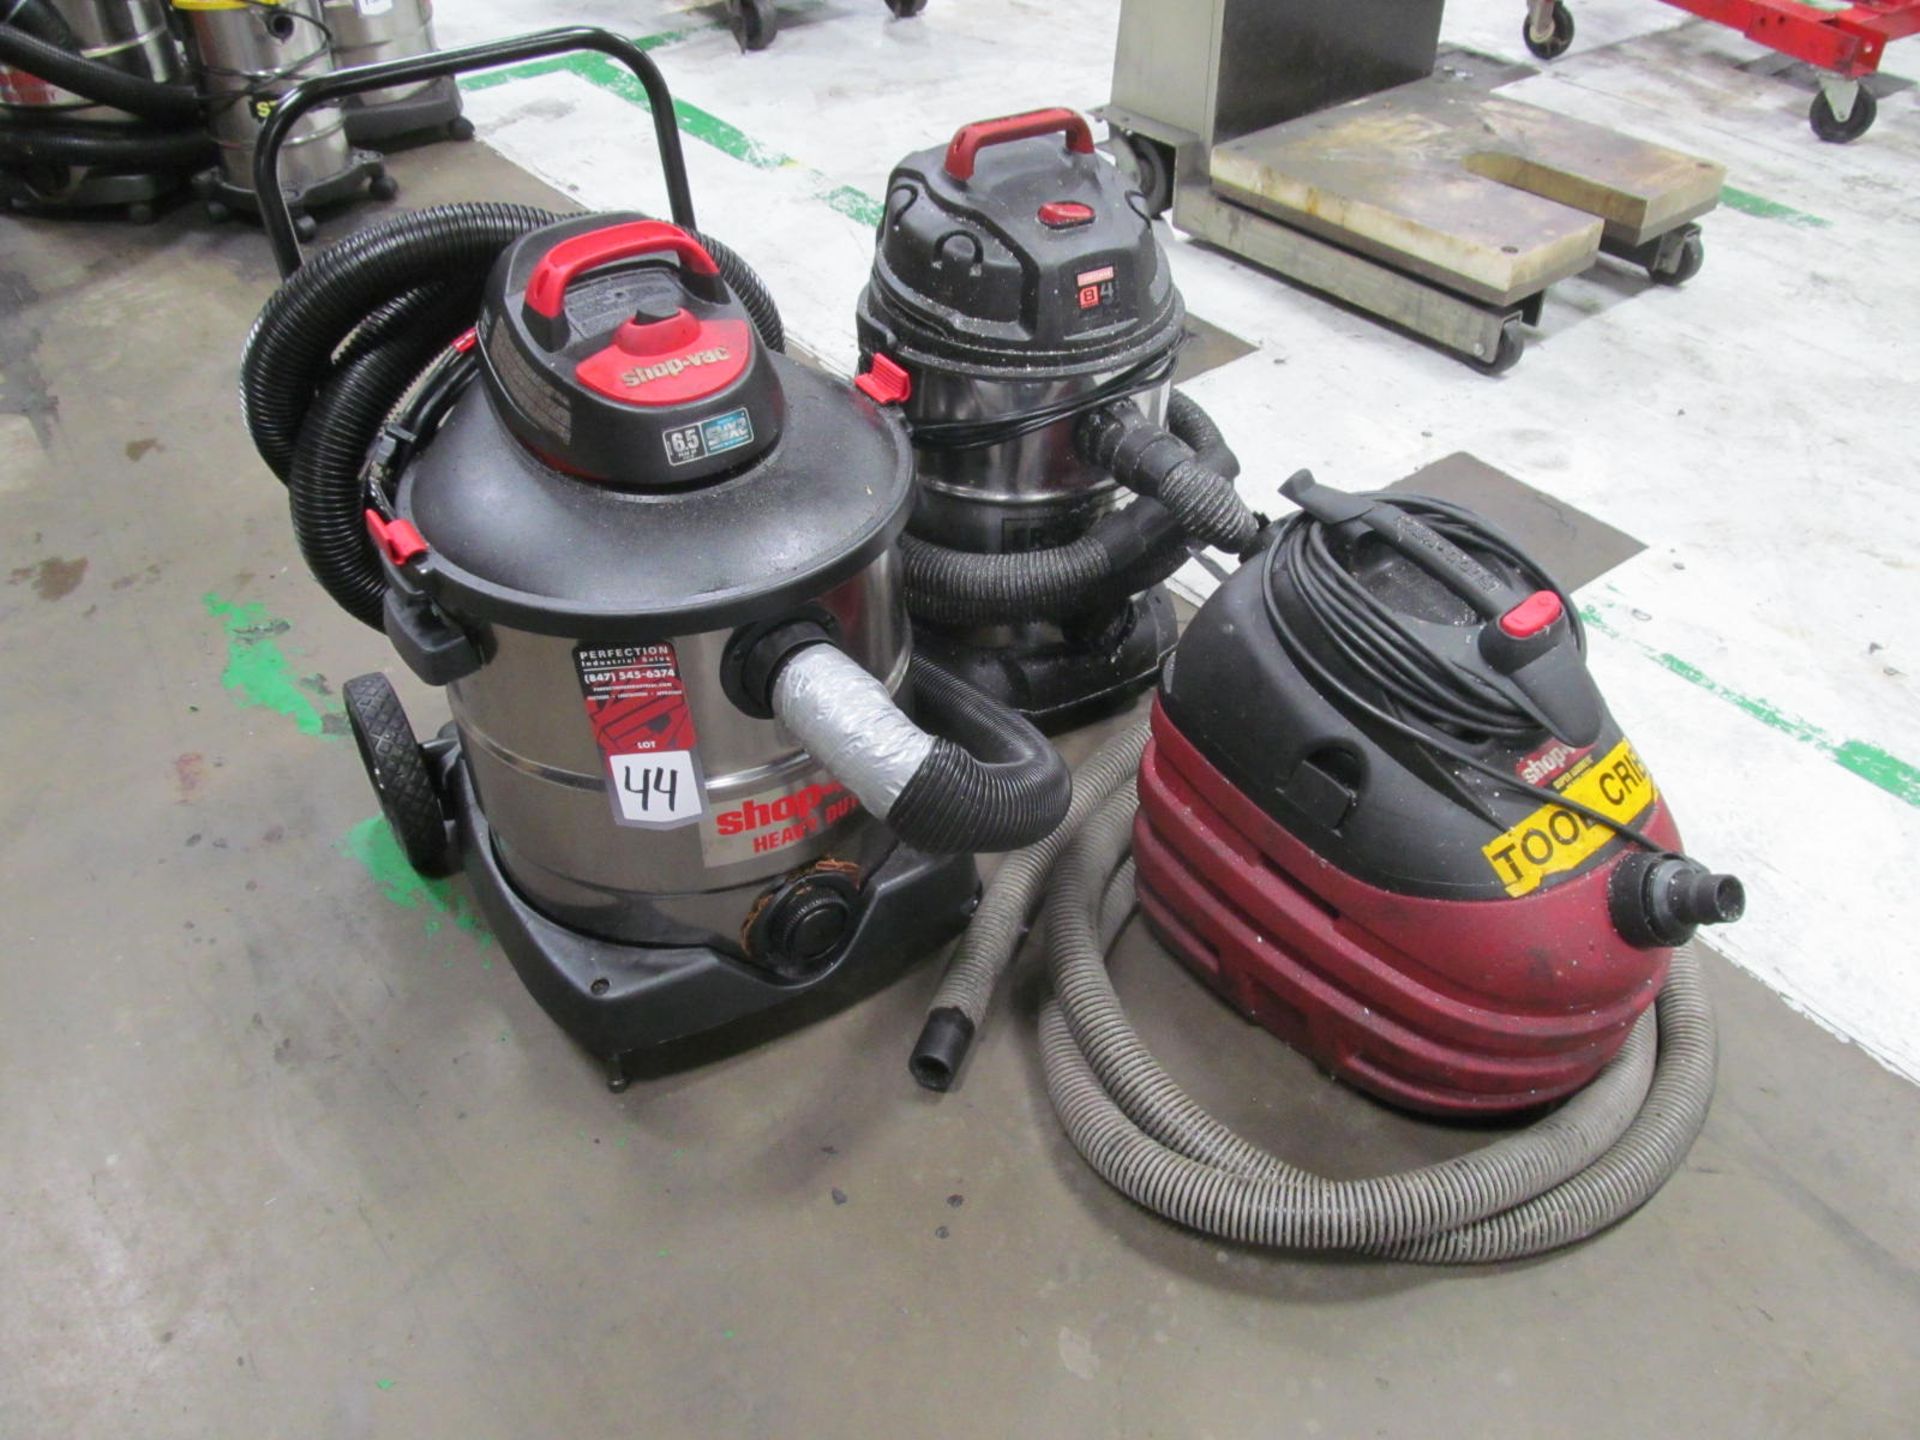 (3) Wet/Dry Vacuums, (1) Shop-Vac #SS16-SQ650, (1) Shop-Vac #CH87-650C, (1) Craftsman #125.17608